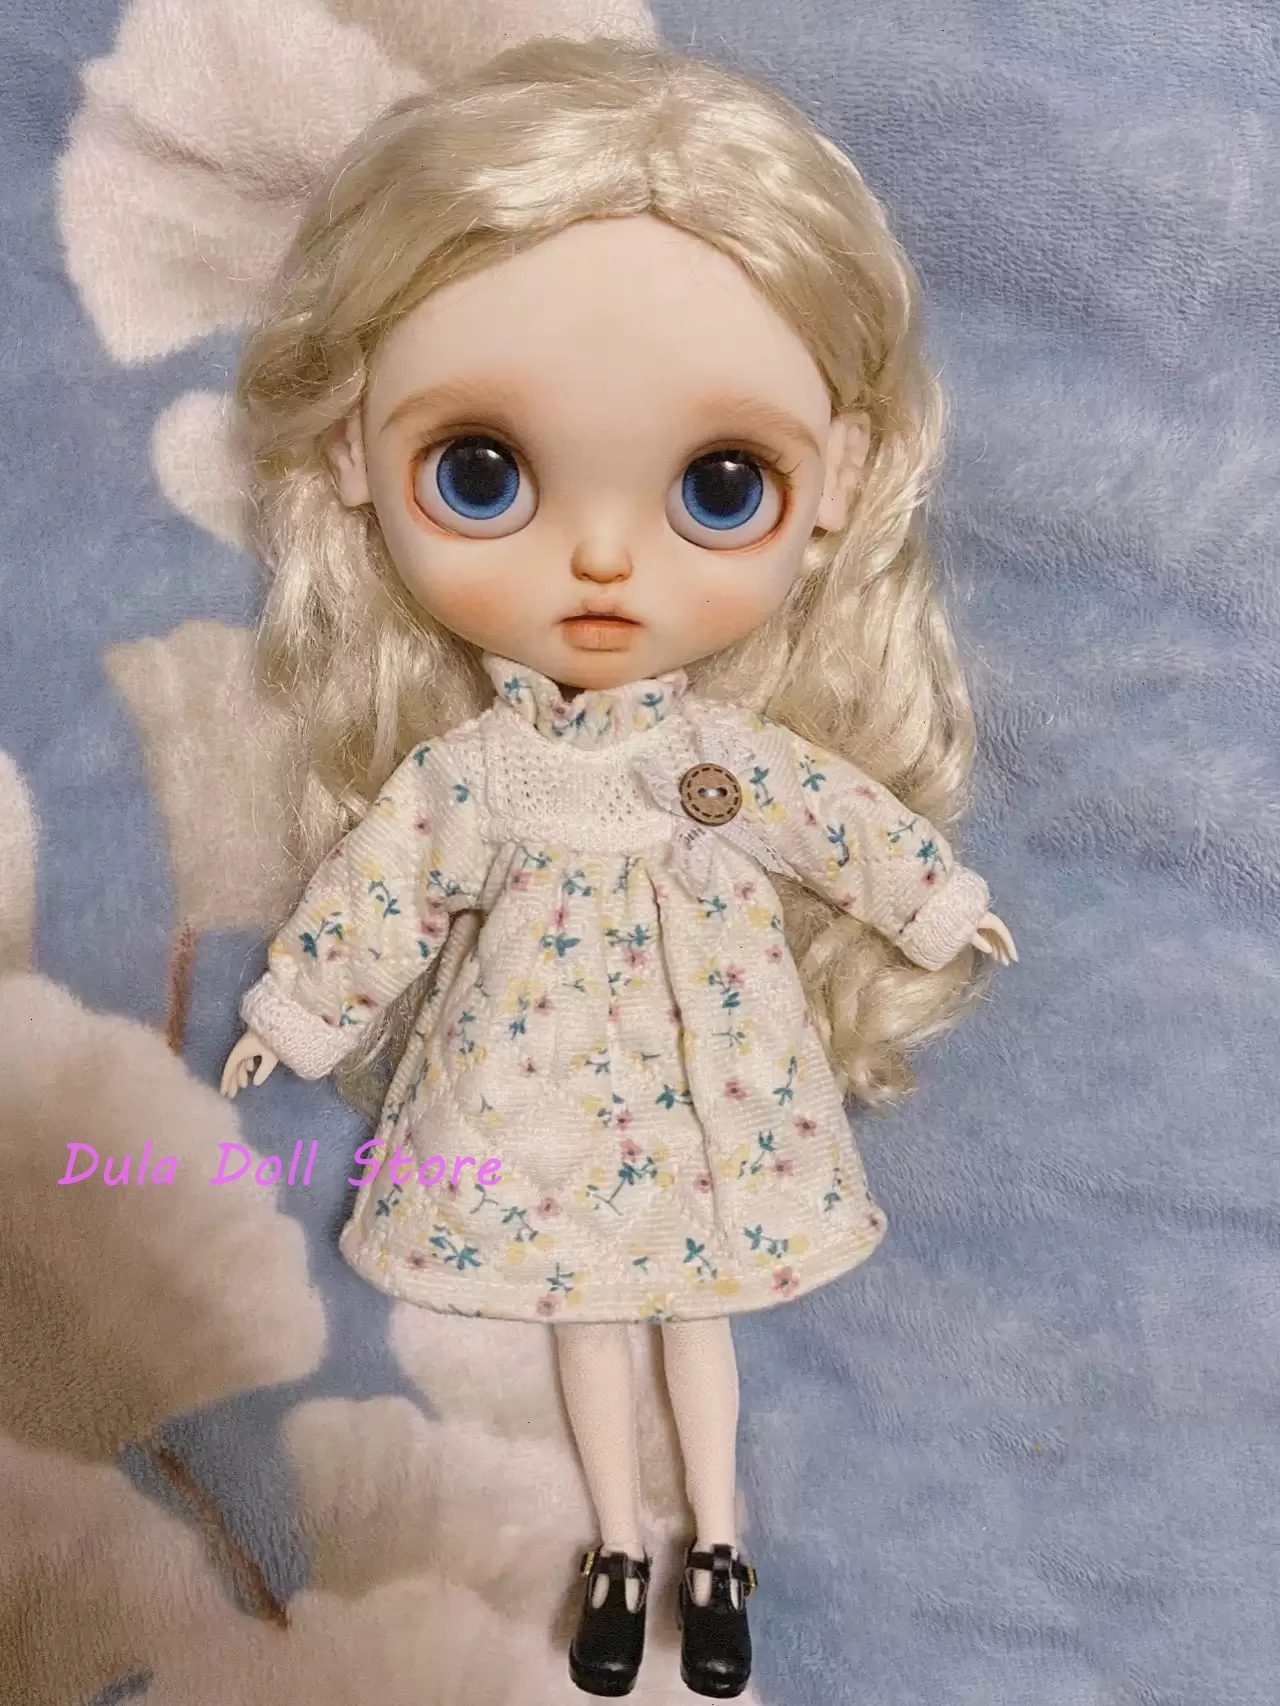 

Dula Doll Clothes Dress Little bunny bear soft cute baby clothes Blythe Qbaby ob24 ob22 Azone Licca ICY JerryB 1/6 Bjd Doll